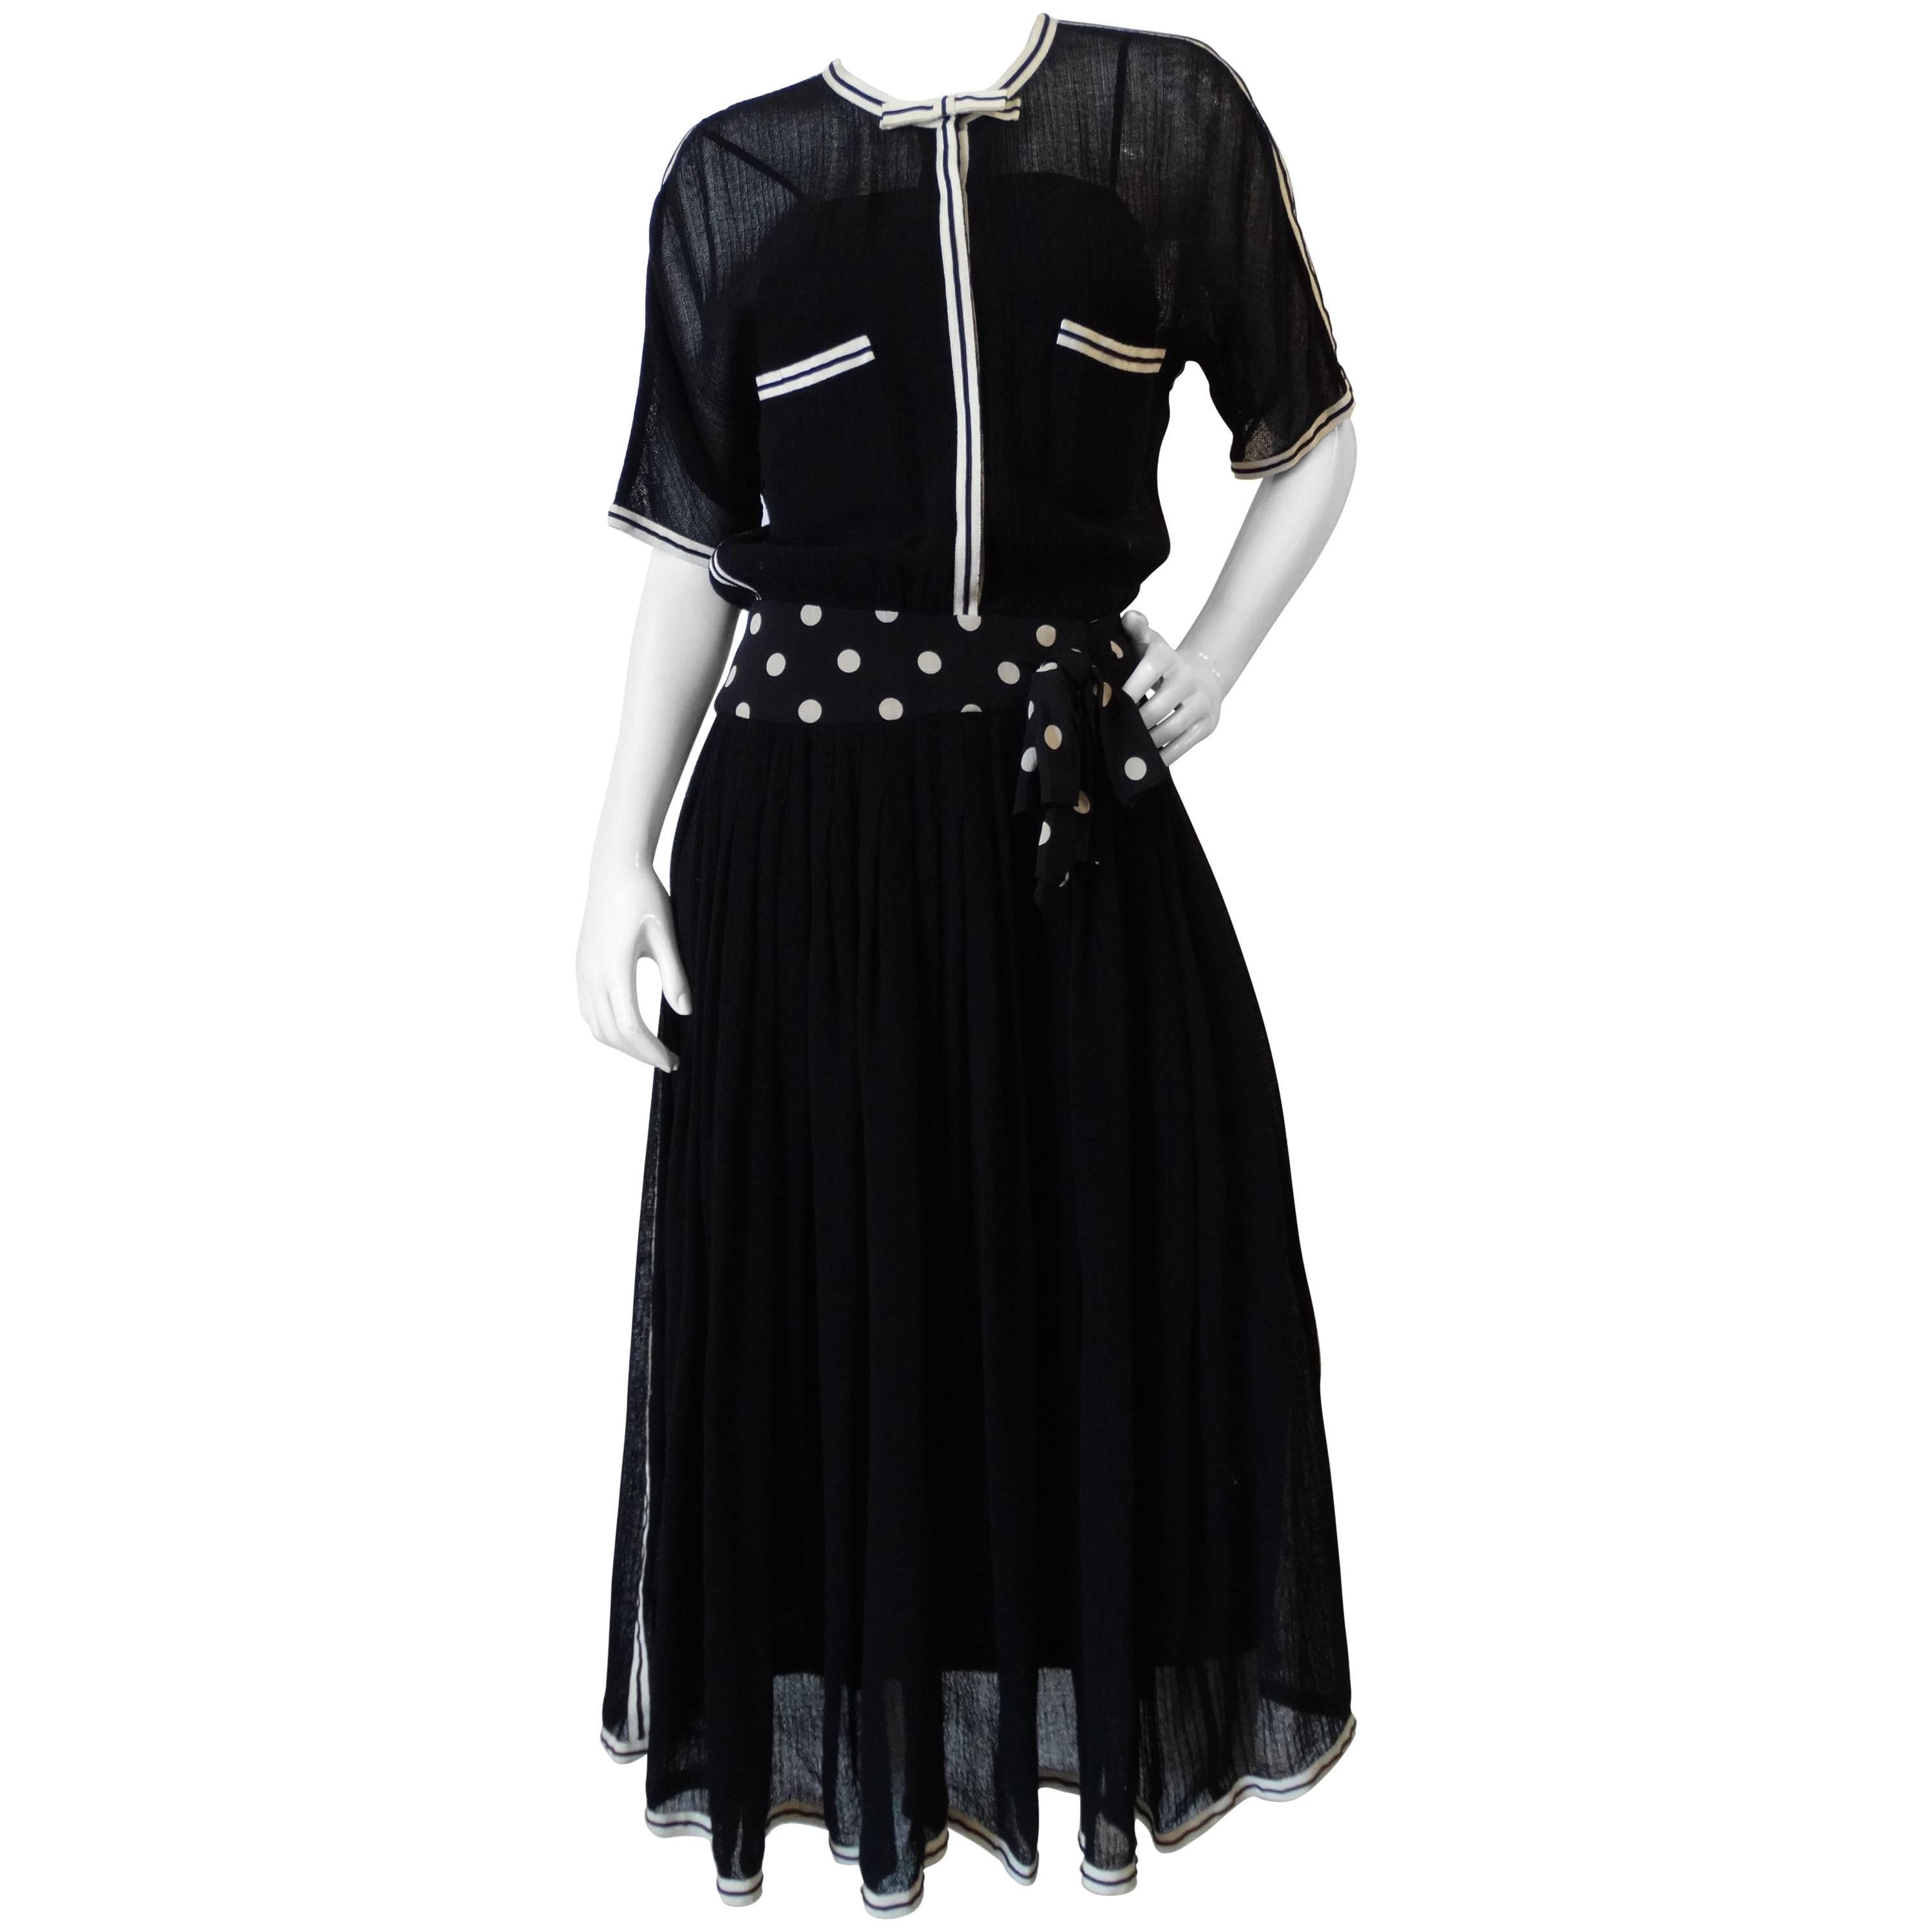 1980s Chanel Black Knit Dress